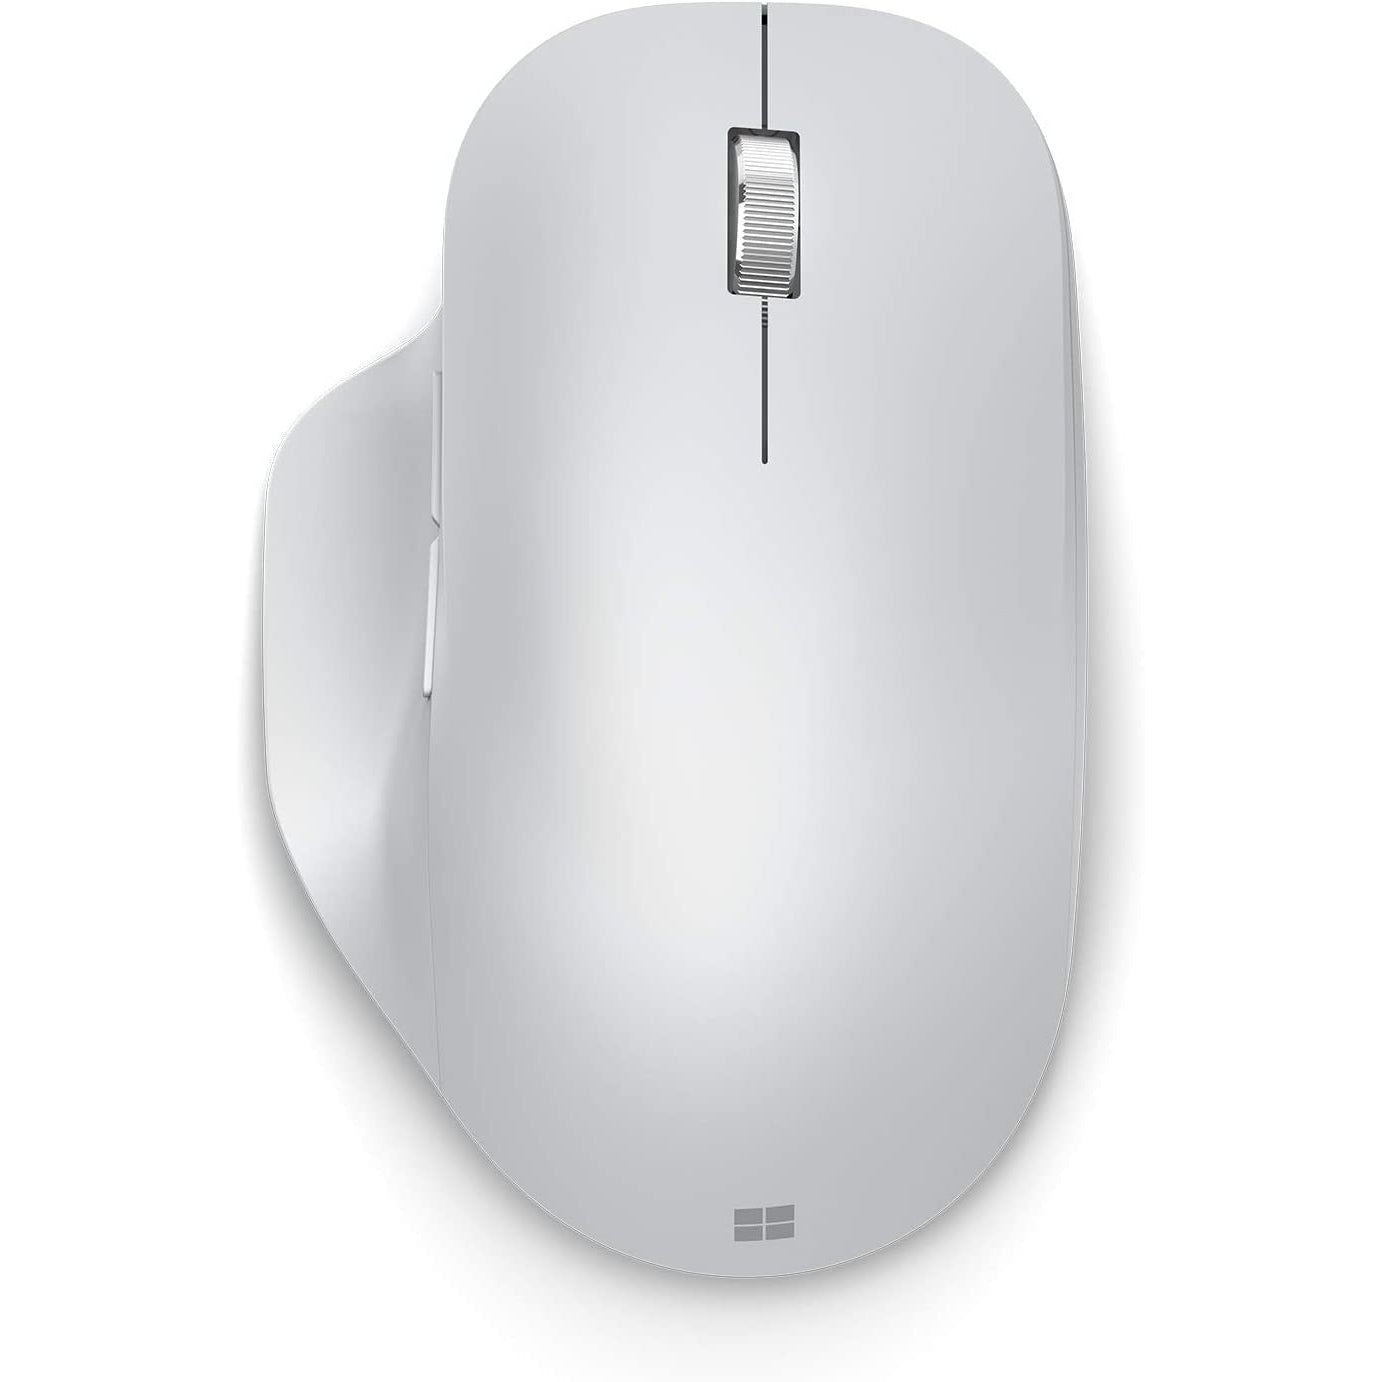 Microsoft 222-00020 Bluetooth Ergonomic Mouse - White - New